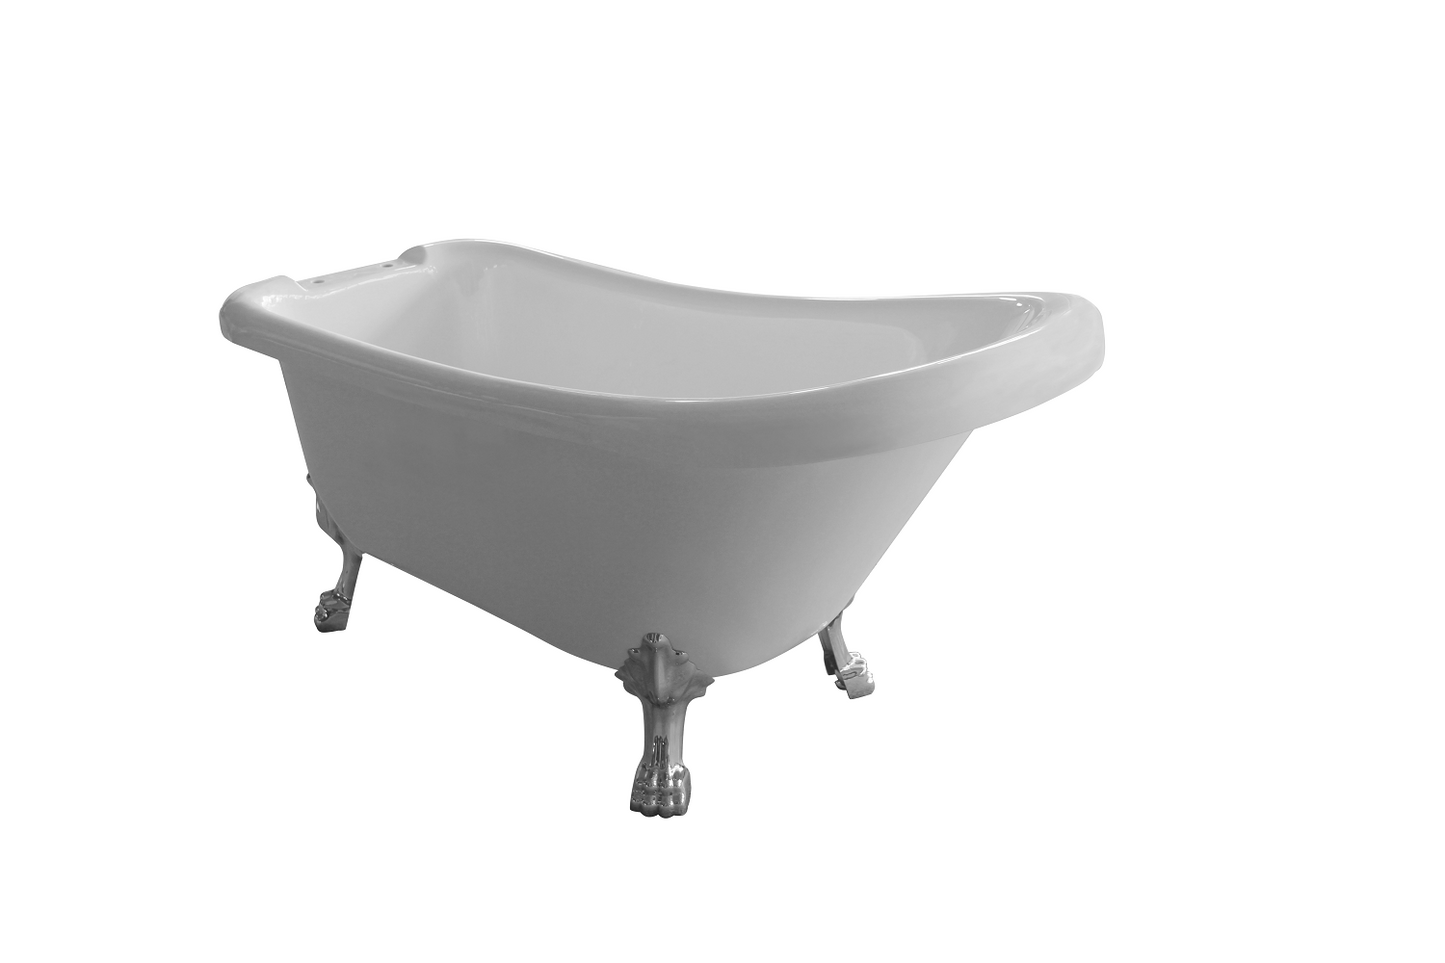 Bathroom Acrylic Free Standing Bath Tub 1500 x 760 x 760MM with Chrome Feet (8022-15)